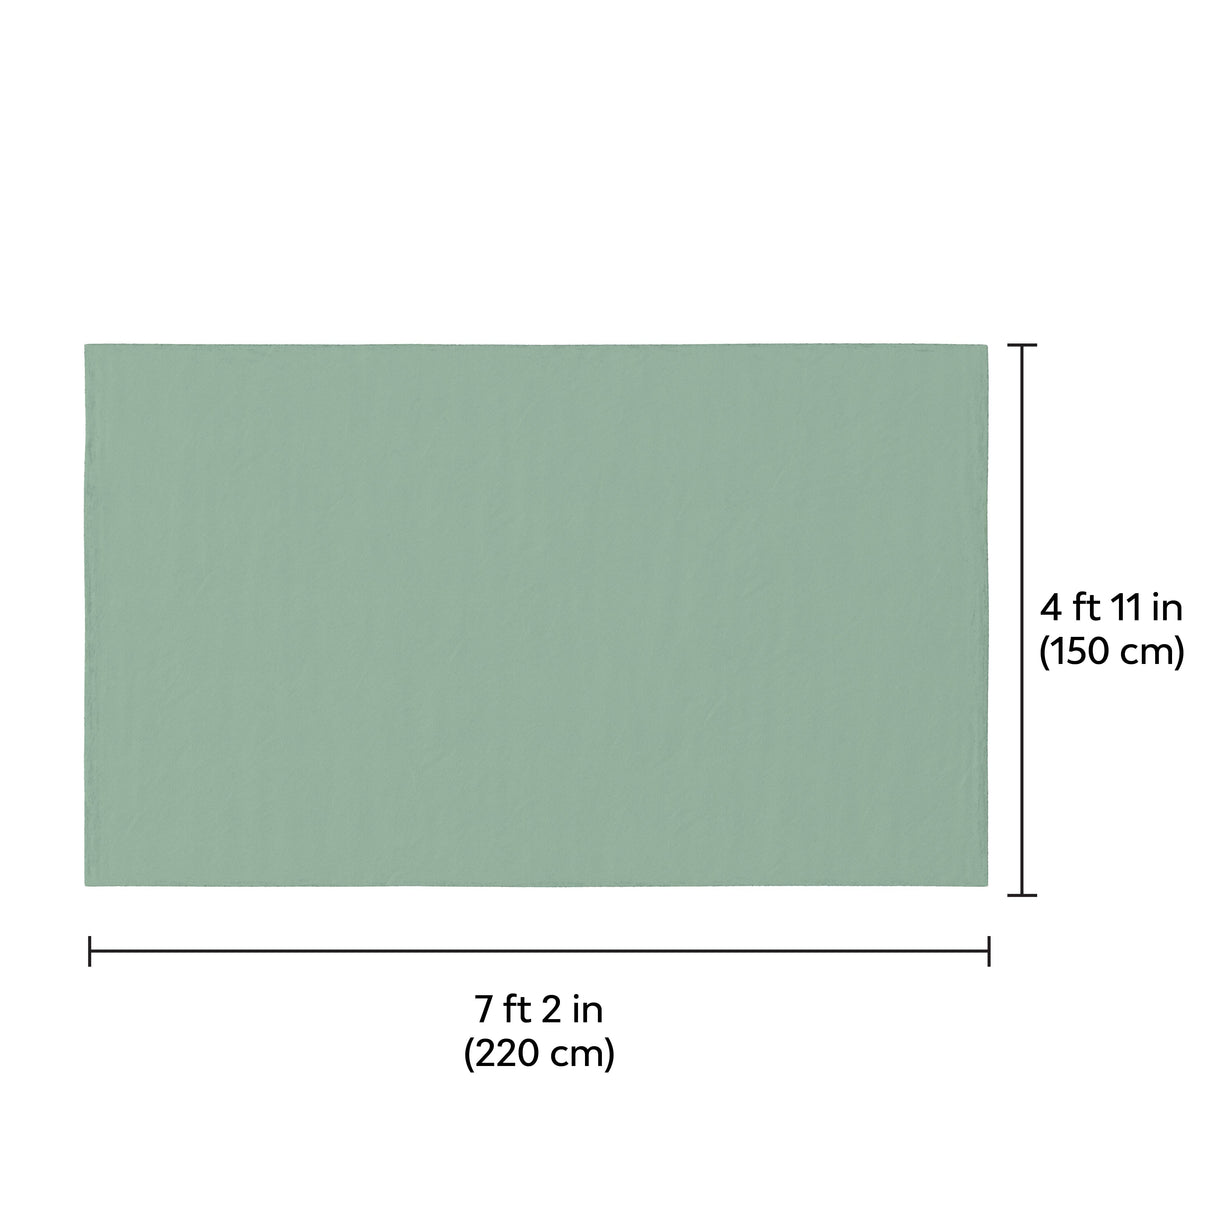 Green bedsheet dimensions 